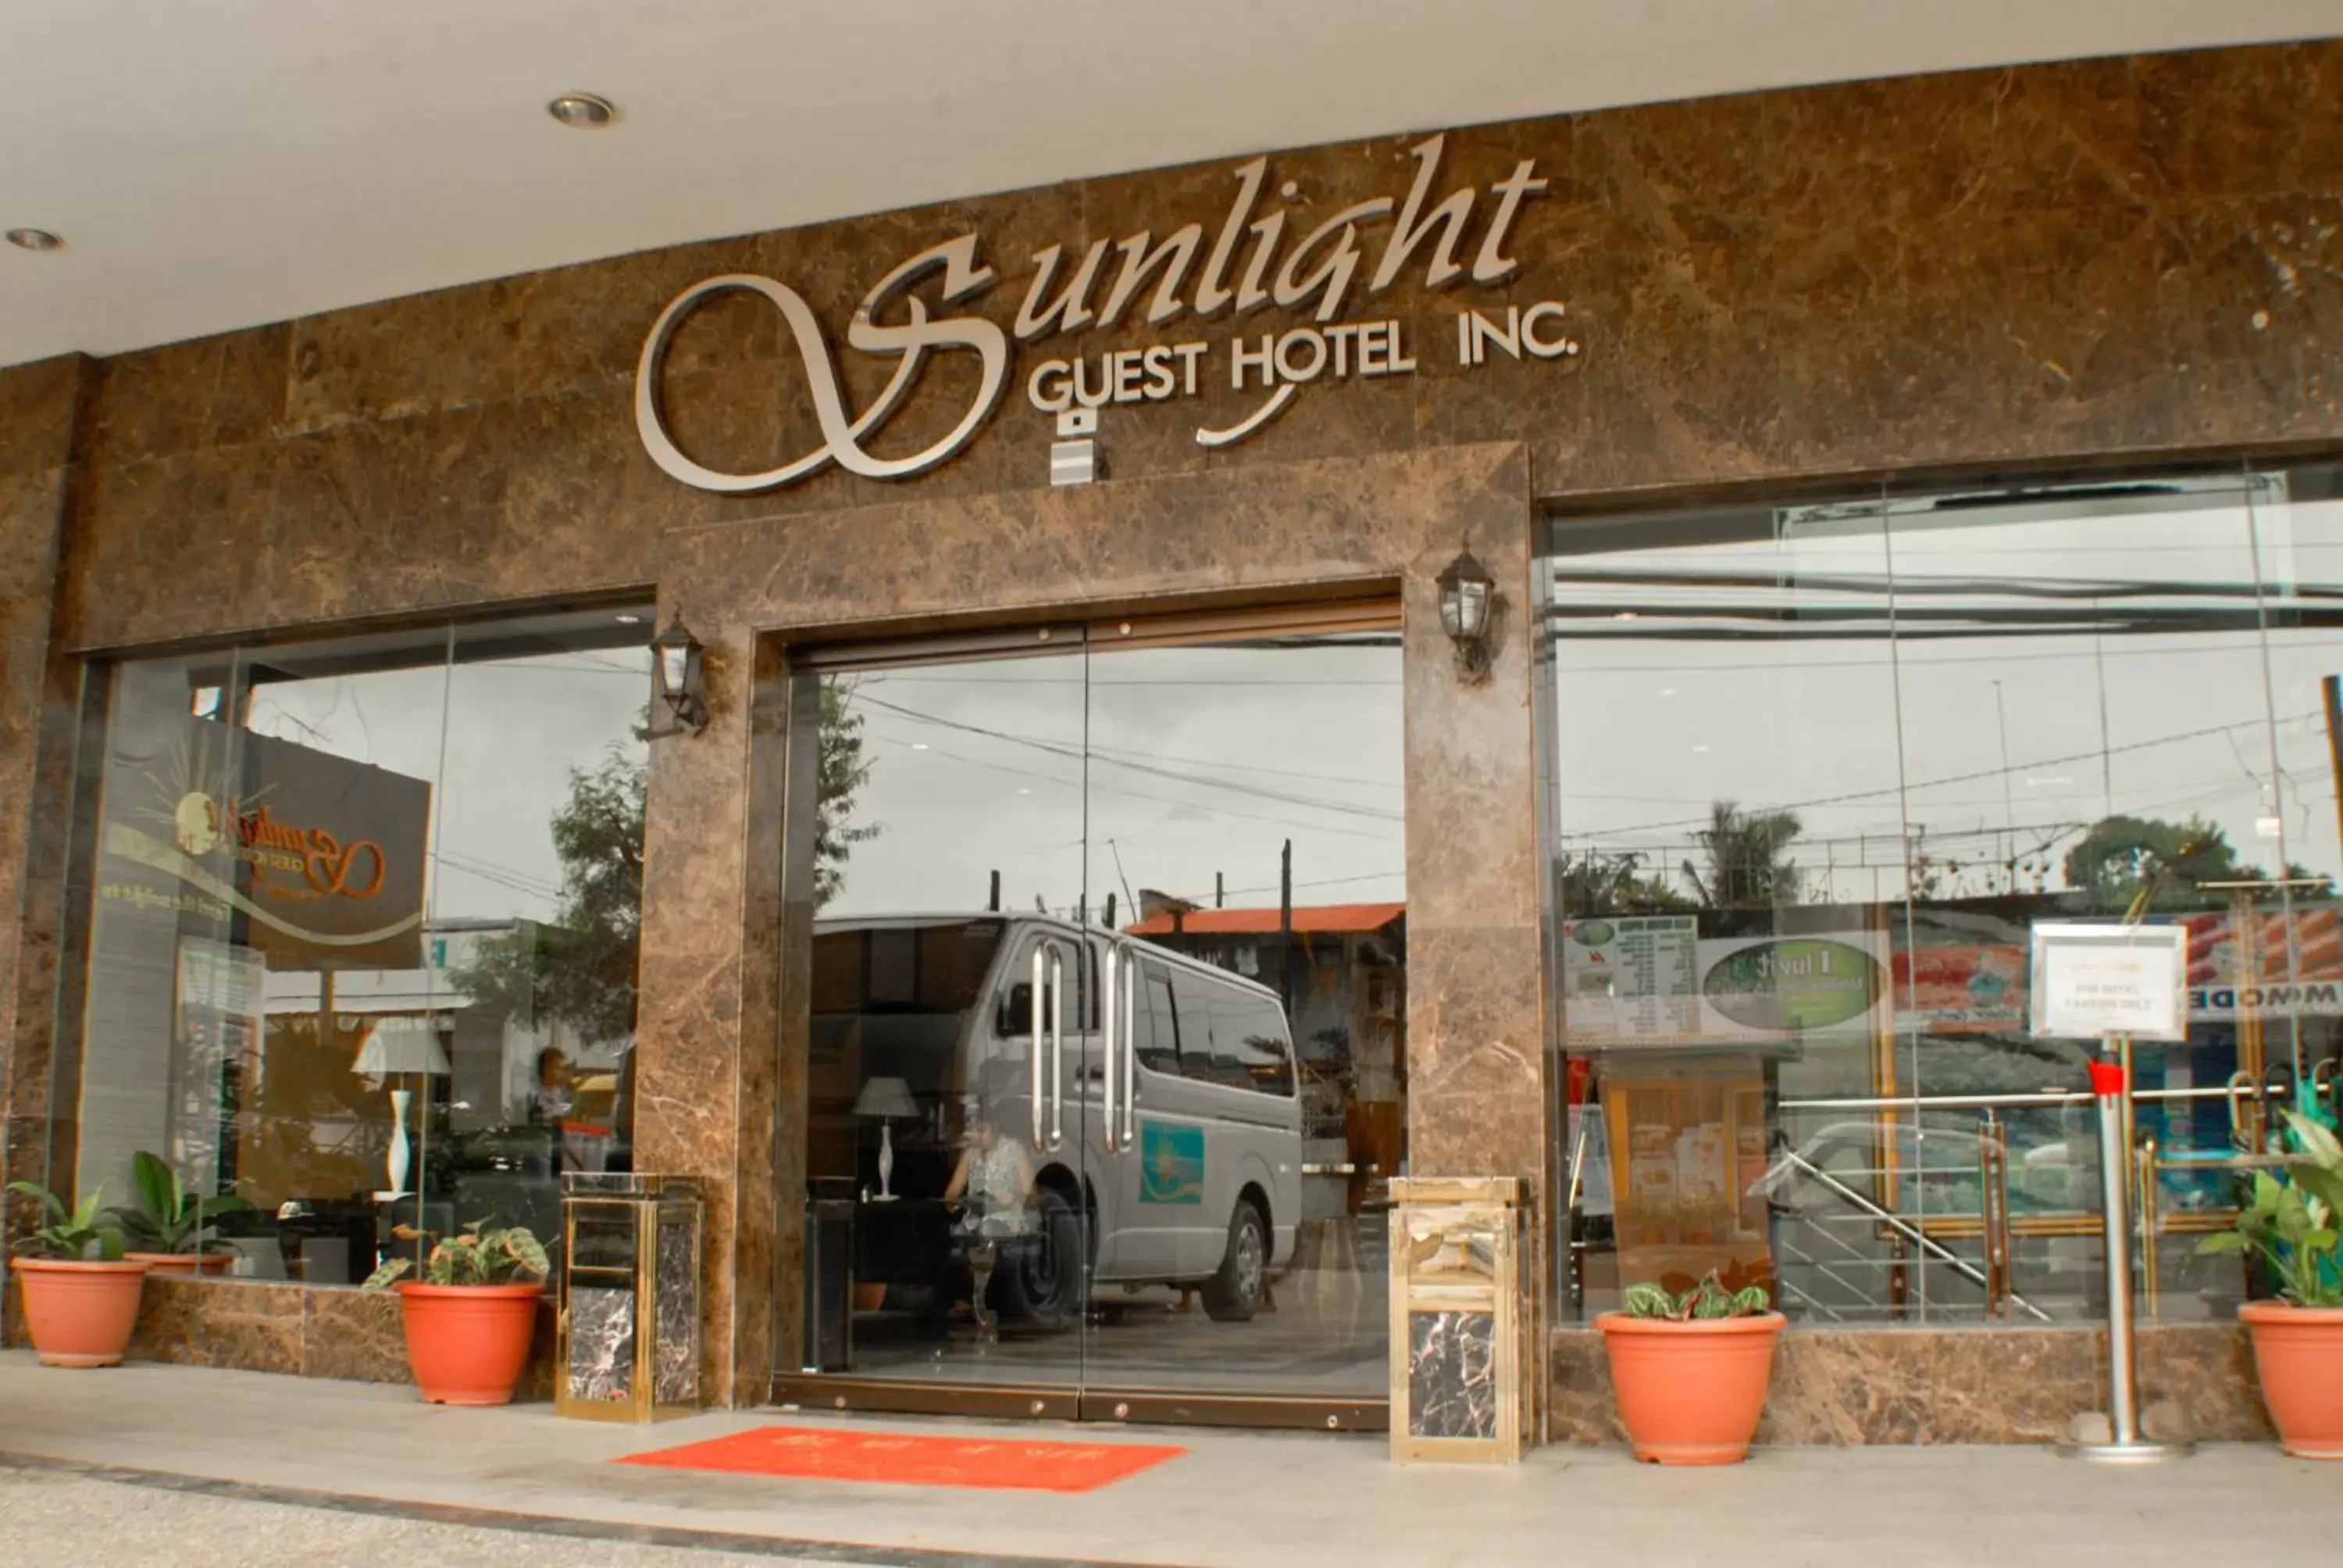 Facade/entrance in Sunlight Guest Hotel